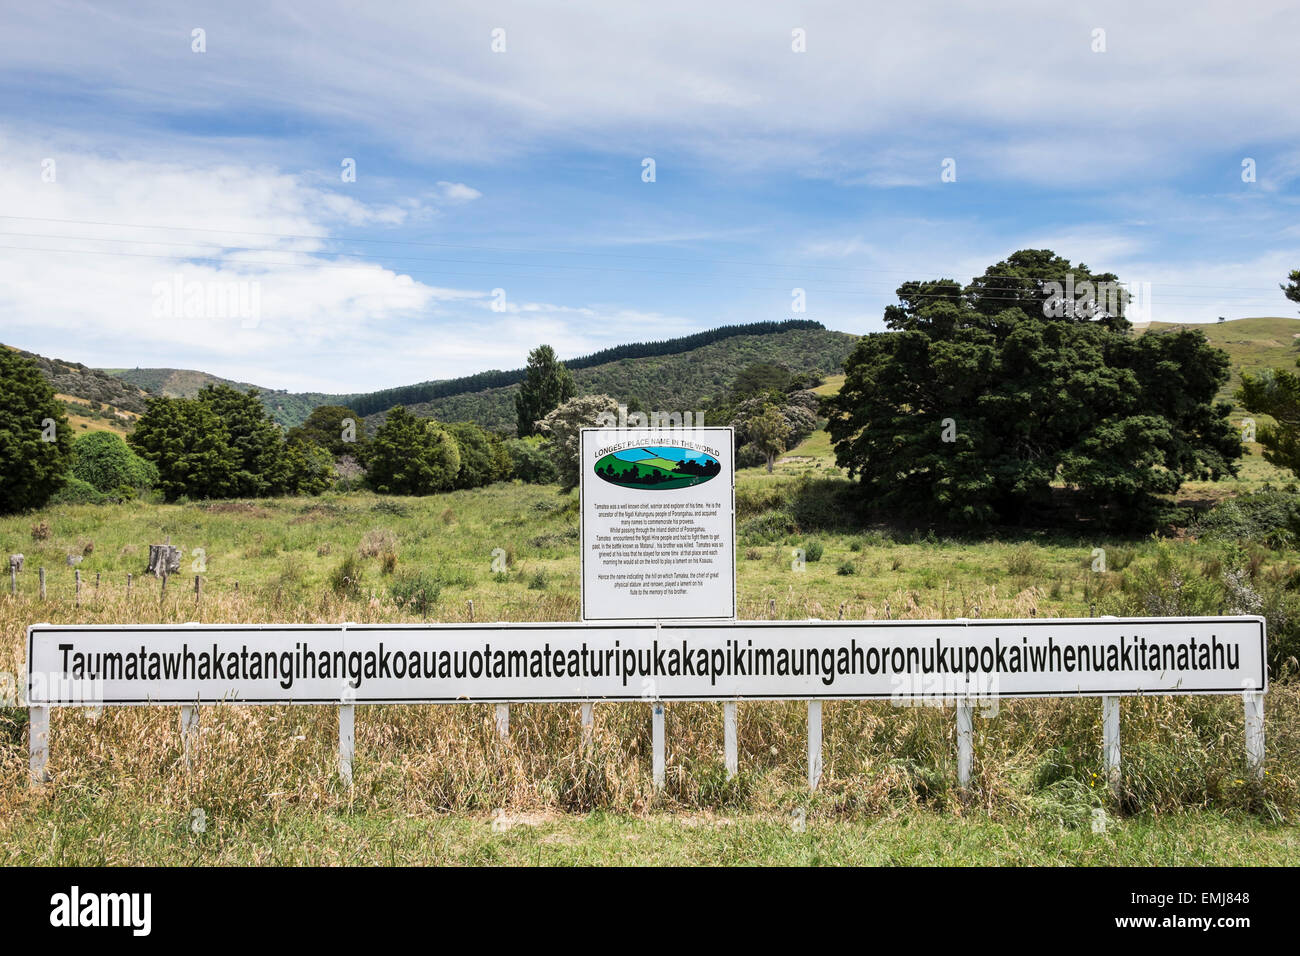 Più lunga Taumatawhakatangihangakoauauotamateaturipukakapikimaungahoronukupokaiwhenuakitanatahu nome di luogo nel mondo in Nuova Zelanda Foto Stock